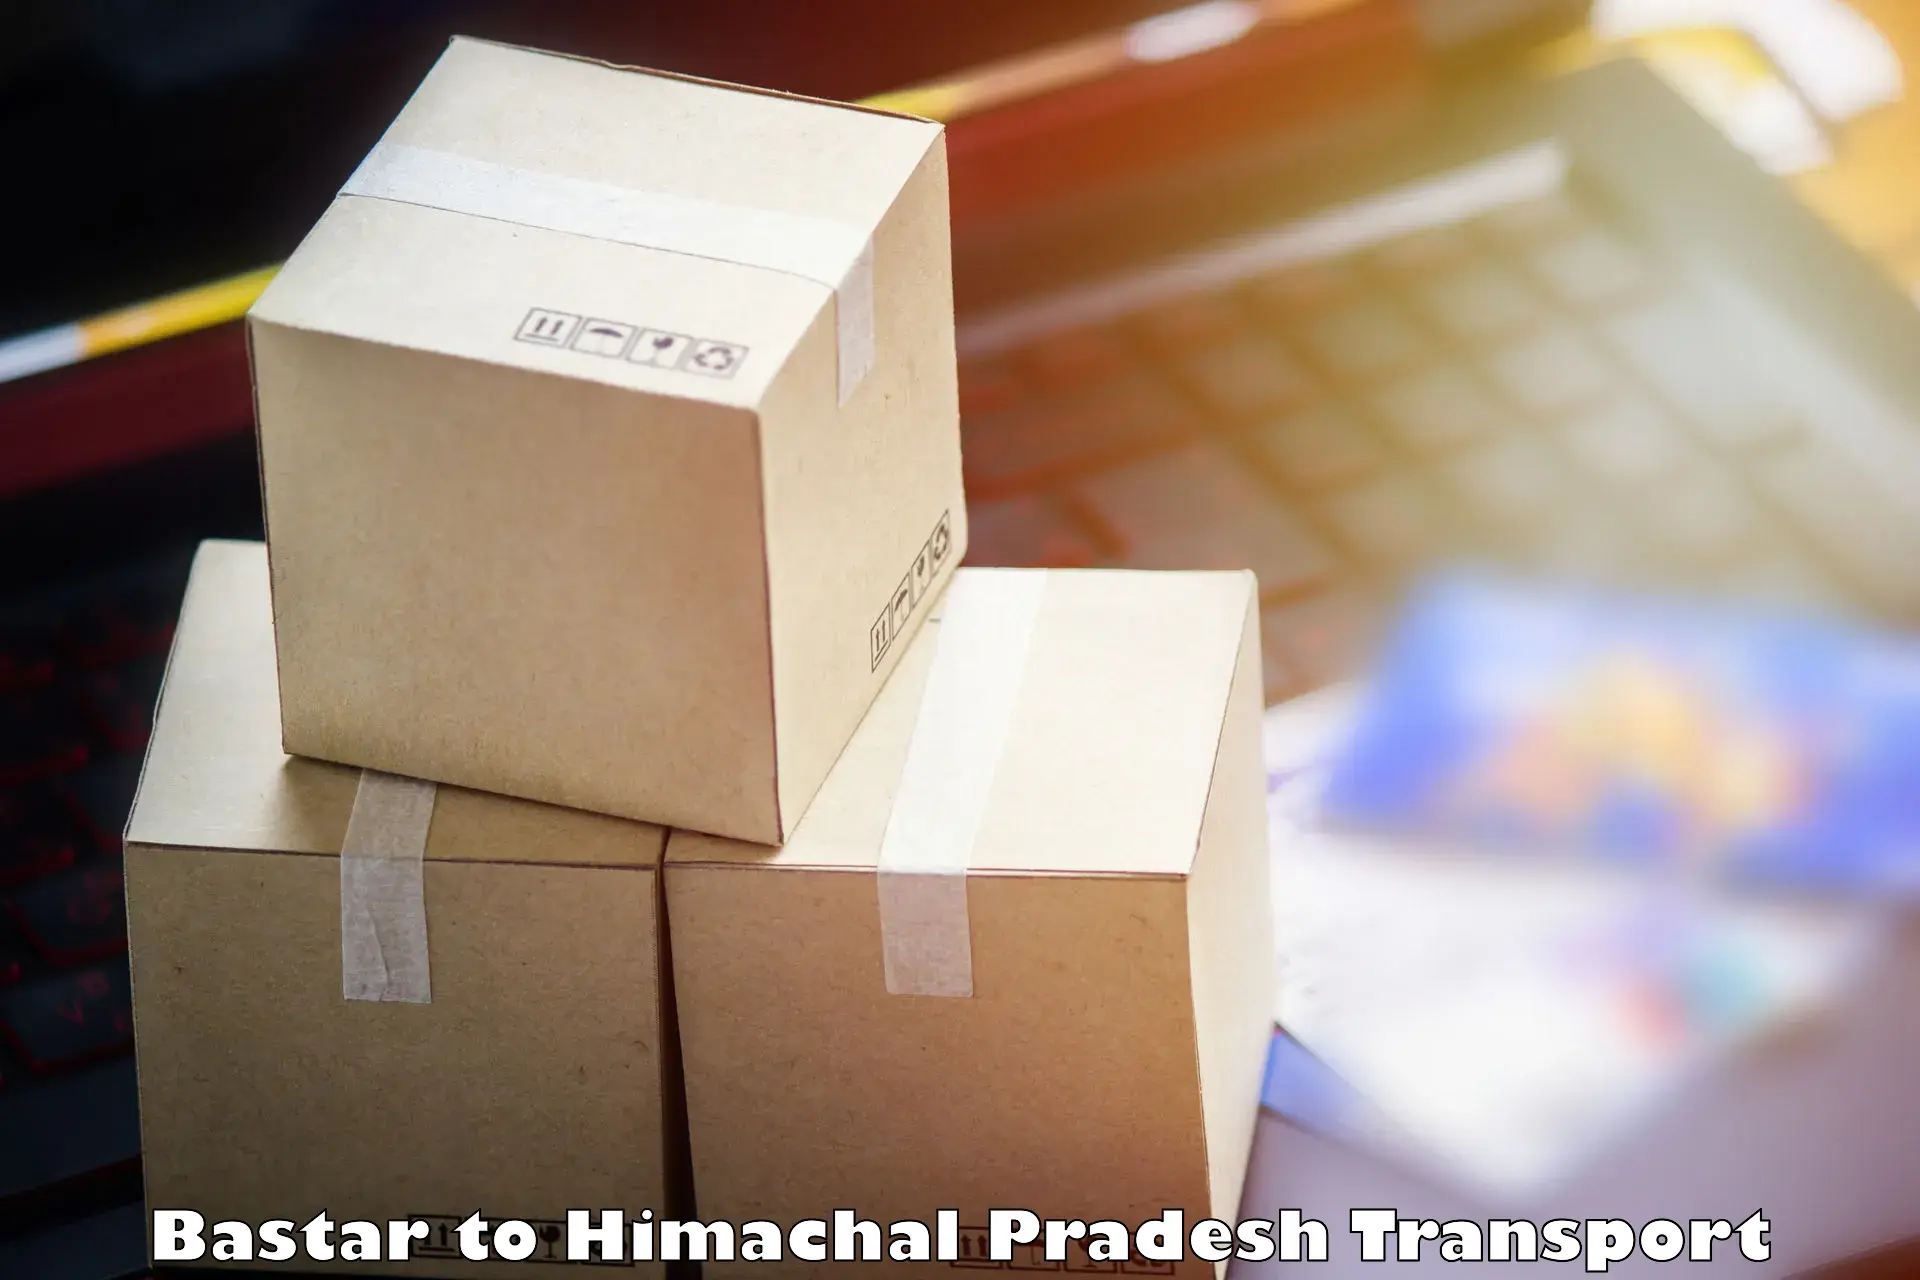 Truck transport companies in India Bastar to Himachal Pradesh